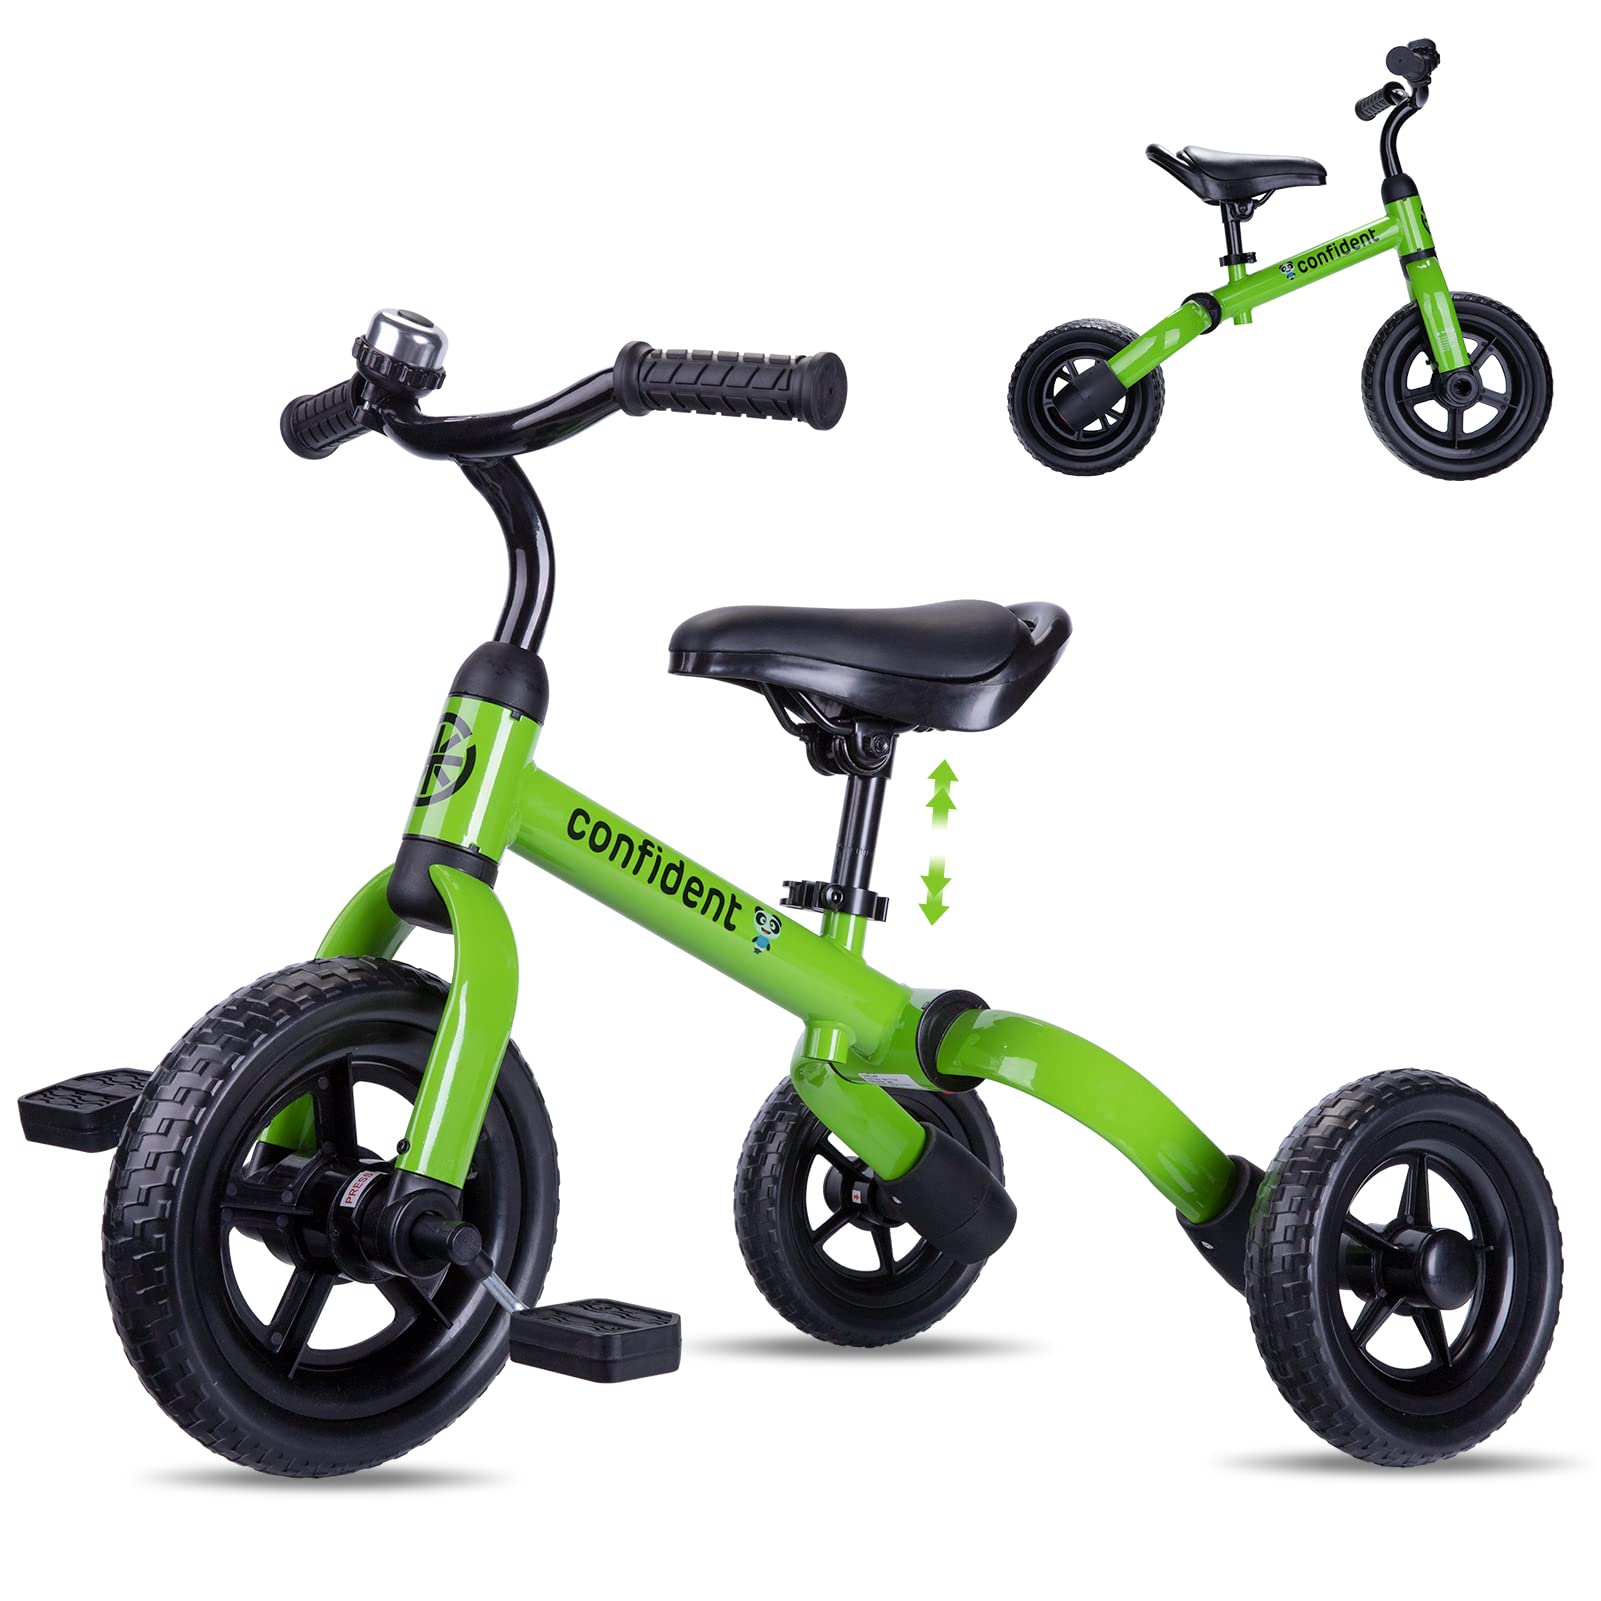 YGJT 3イン1 三輪車 幼児用 2歳 3歳 4歳 折りたたみ式 子供用自転車 調節可能なシートと取り外